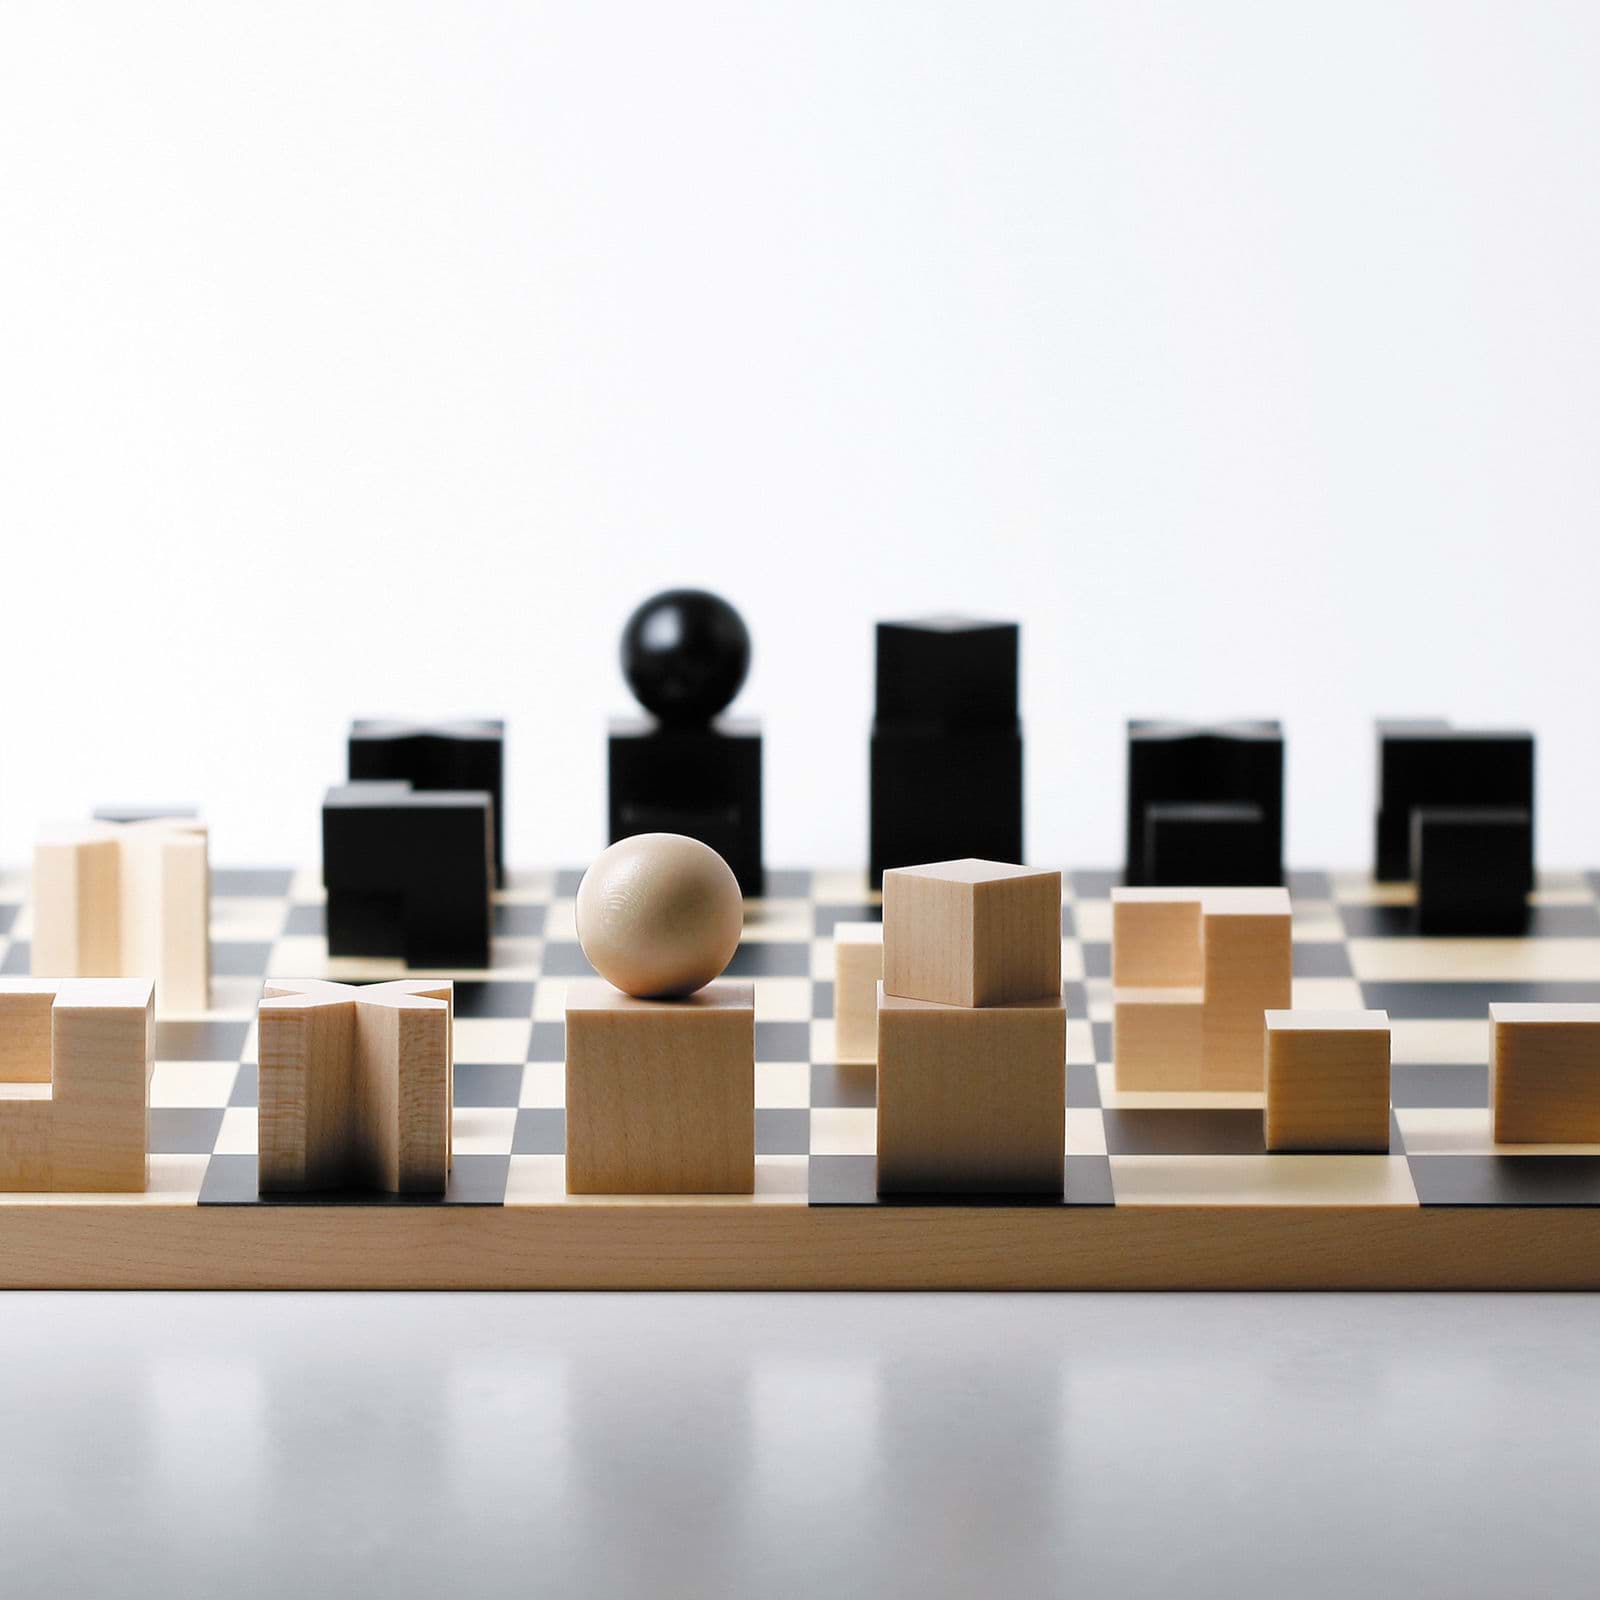 Josef Hartwig tarafından Bauhaus satranç seti resmi